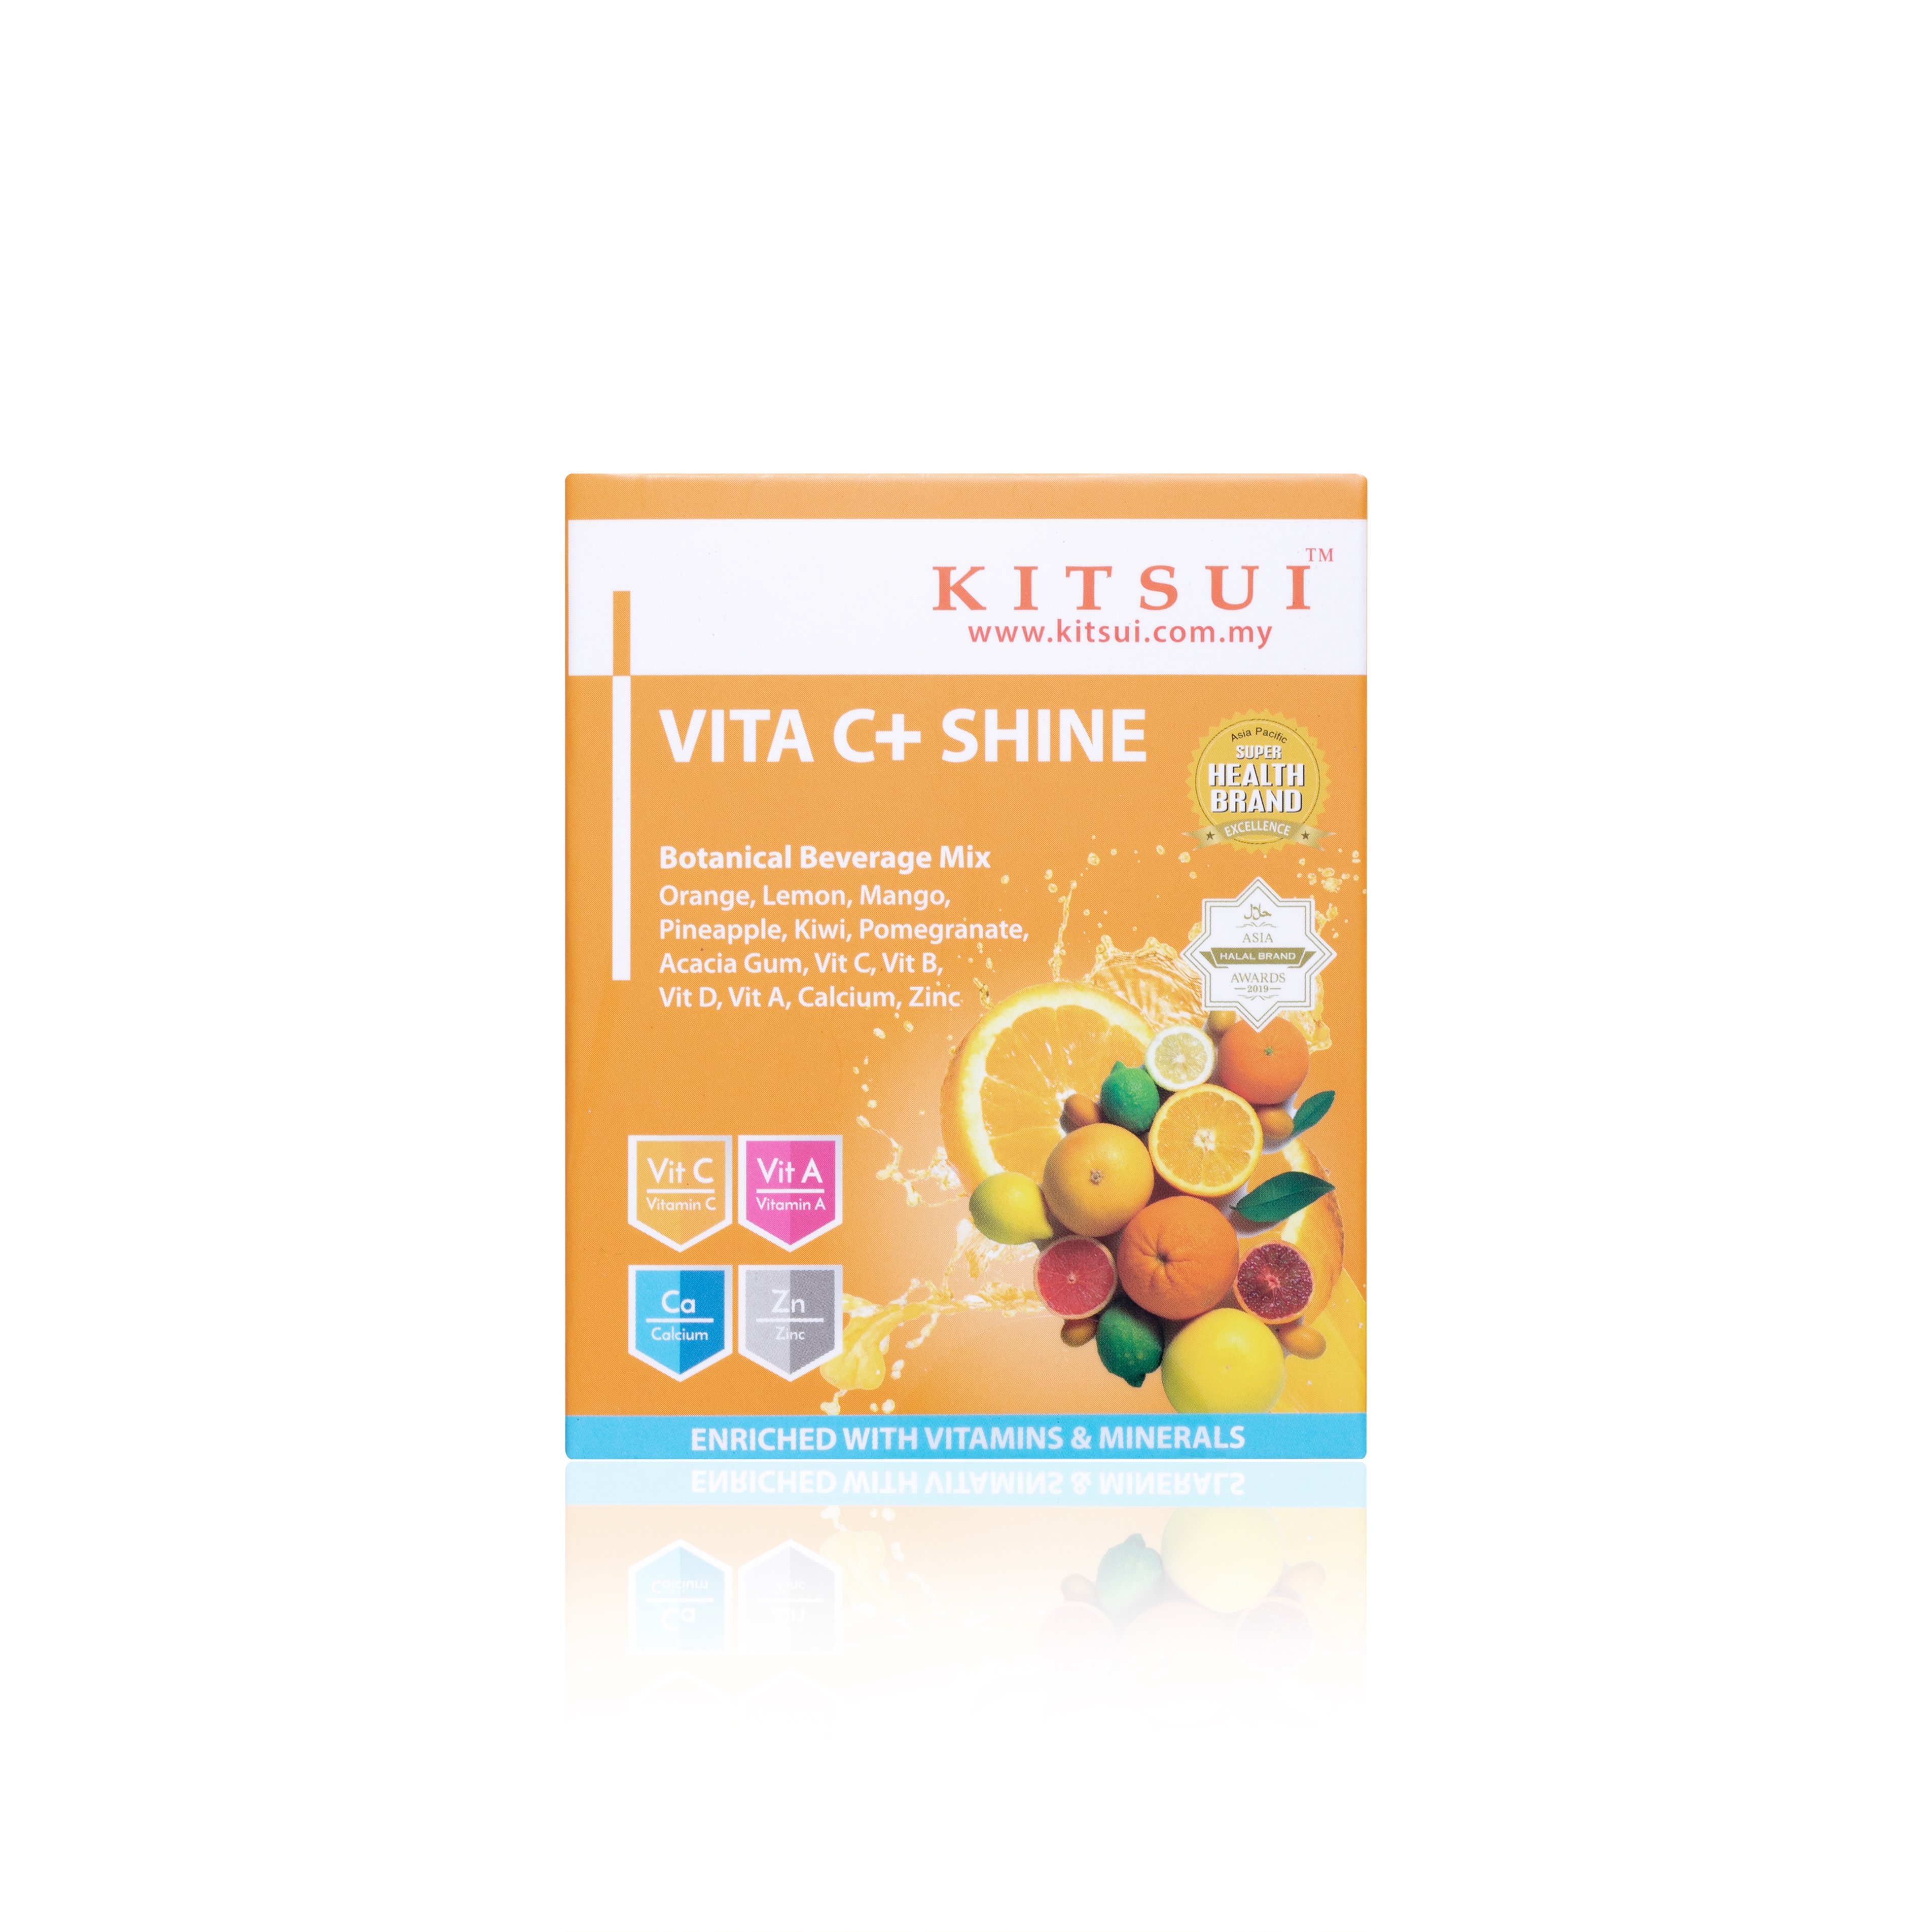 Kitsui Vita C+ Shine 15g x 10's